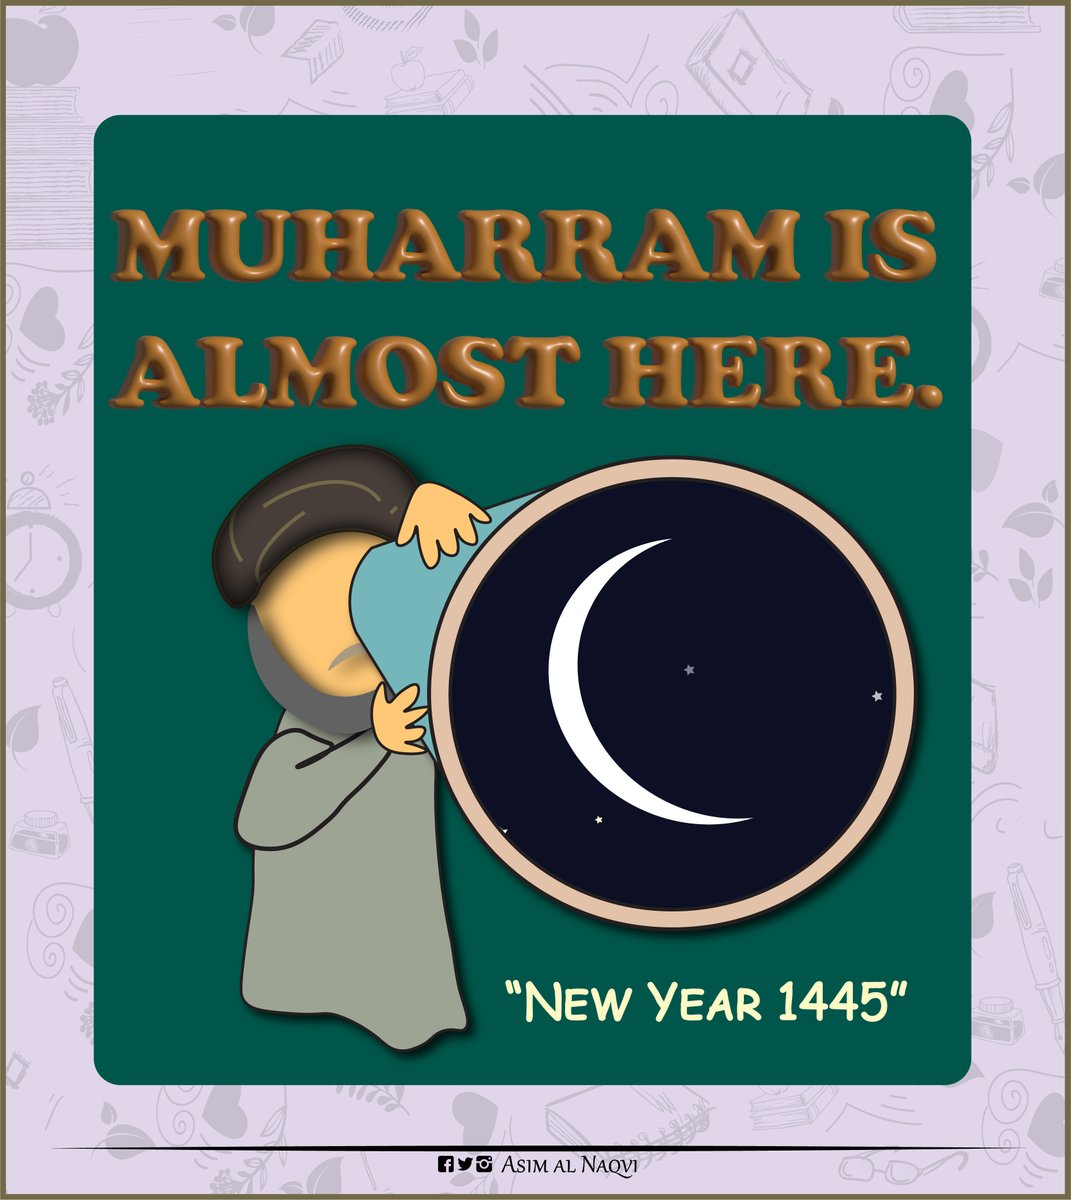 The Islamic New Year is the first day of the first month of the Islamic calendar, which is called Muharram.
#muharramreminder #muslimahart #muharram1445 #muharram #azadari #gratefulheart #muslimillustrators #frenchmuslims #revertmuslim #converts #thanksallah #muslimillustrator